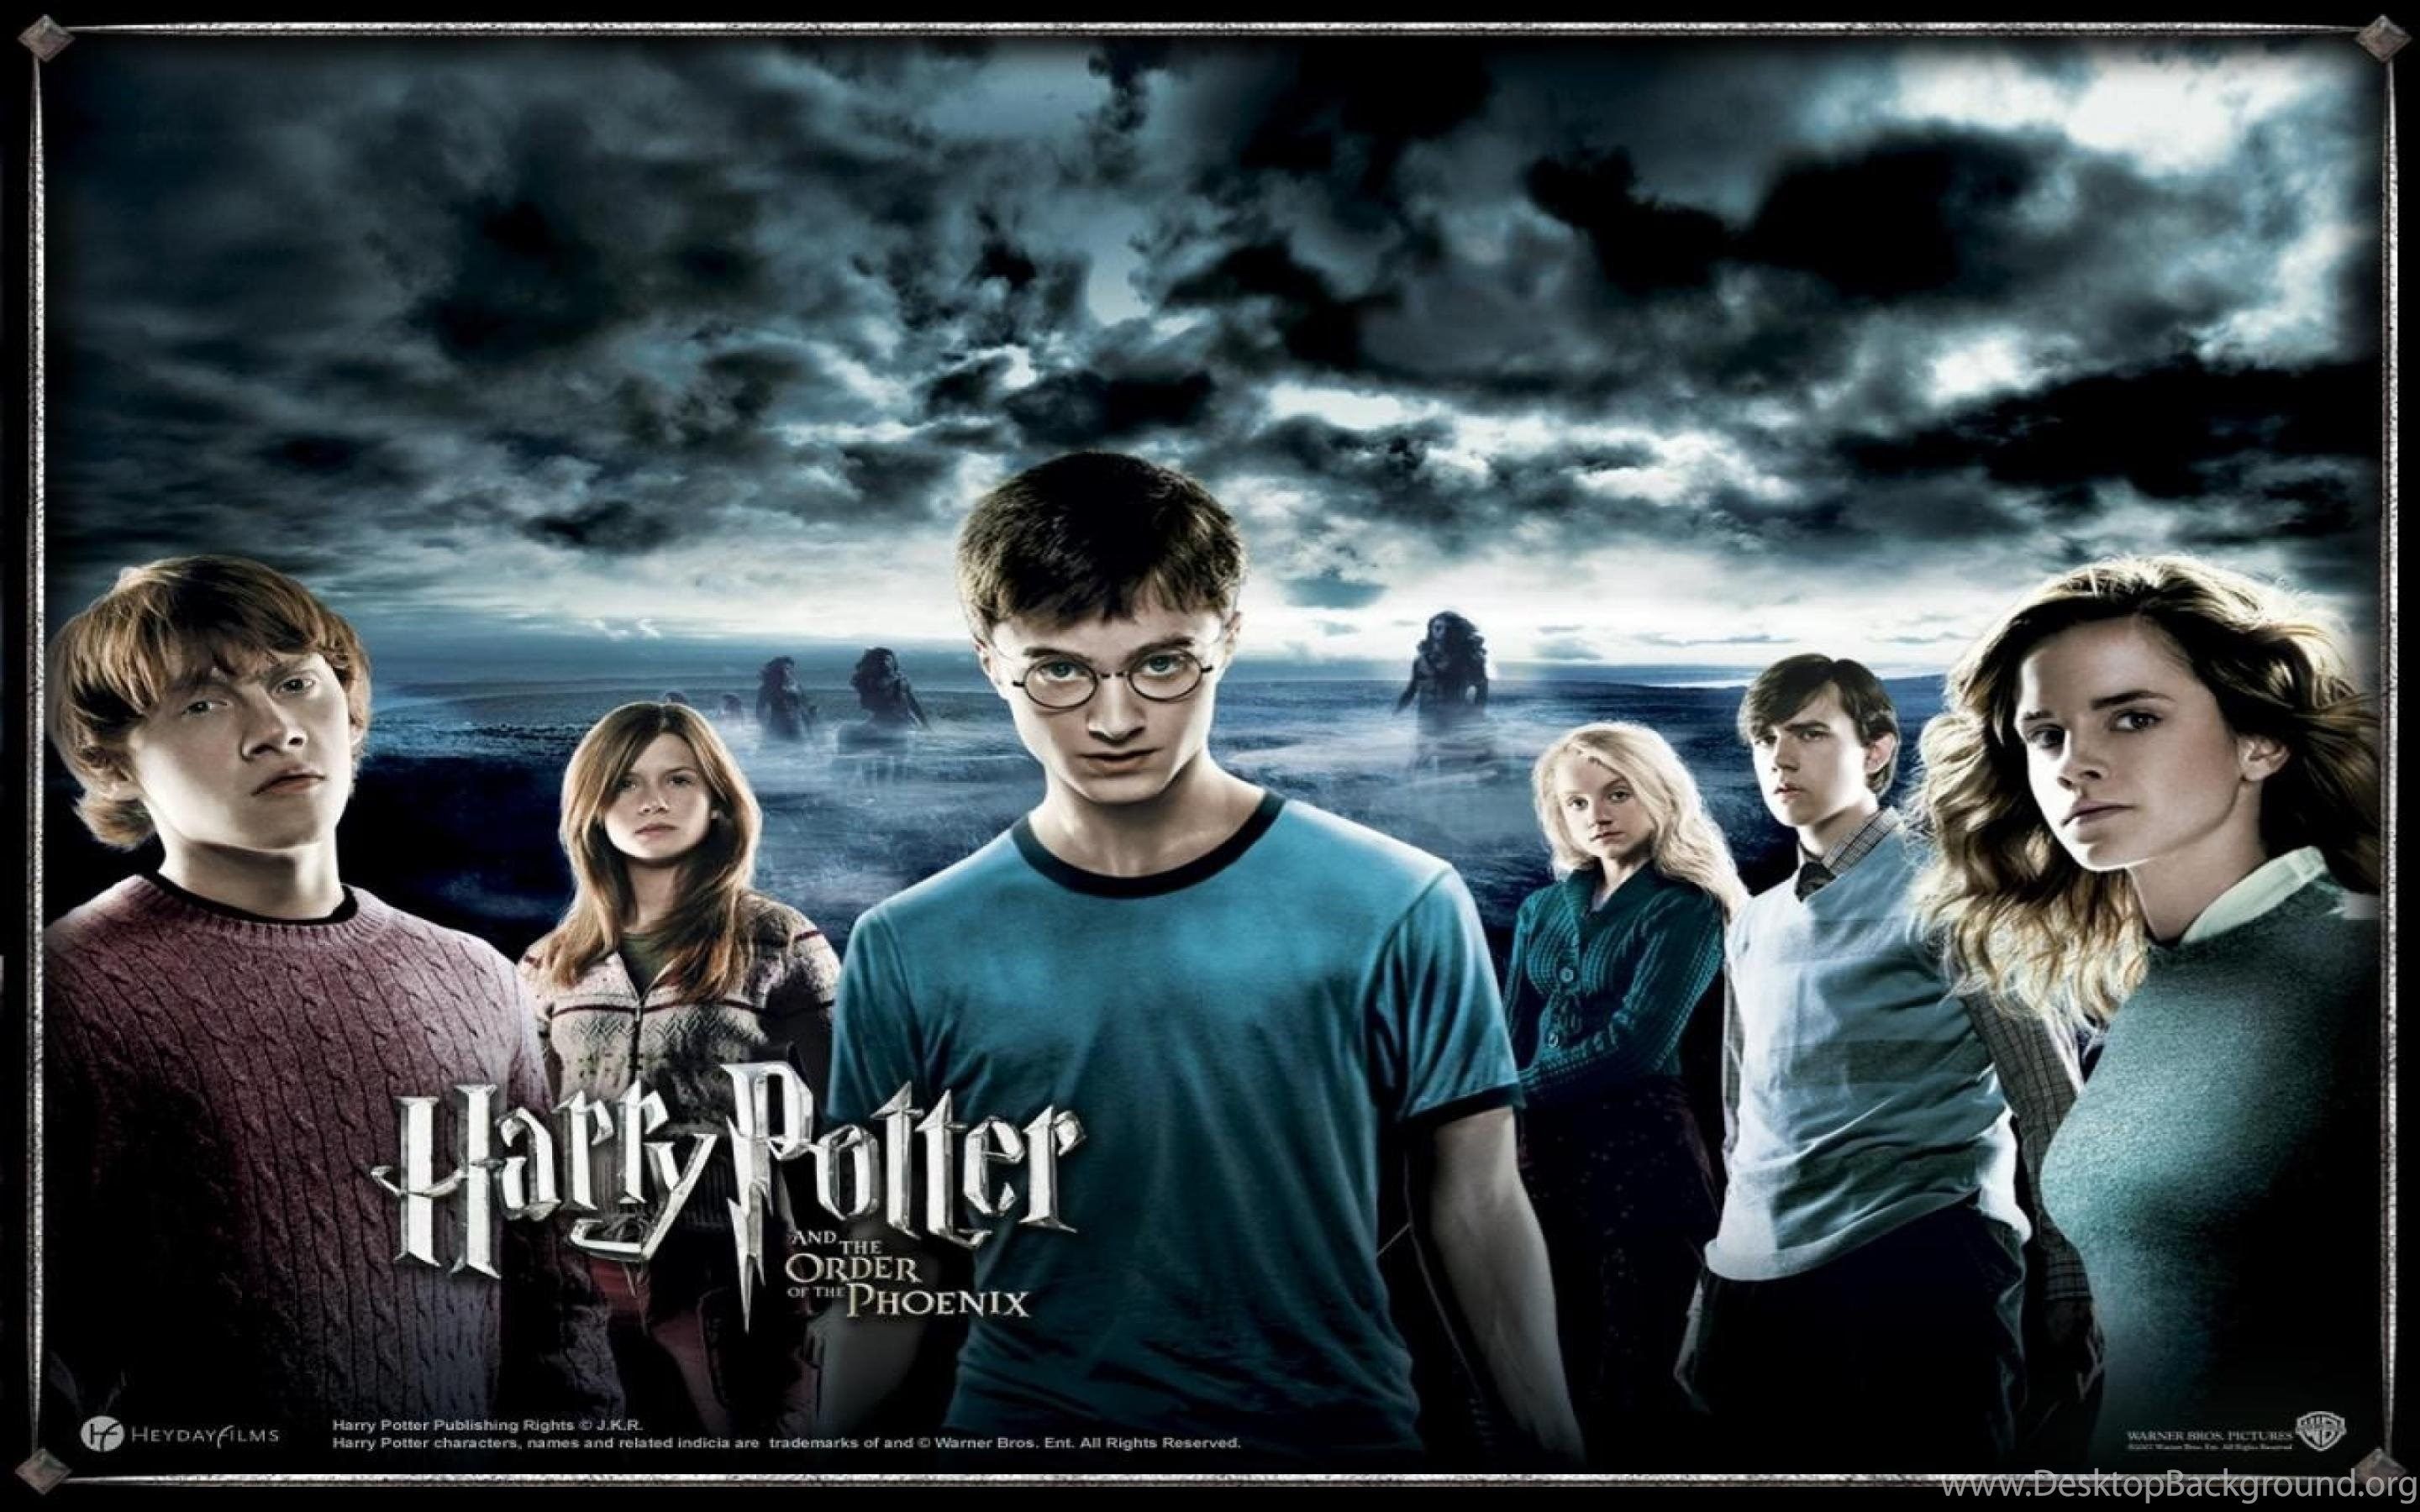 2880x1800px Wallpaper Harry Potter Poster Desktop Background